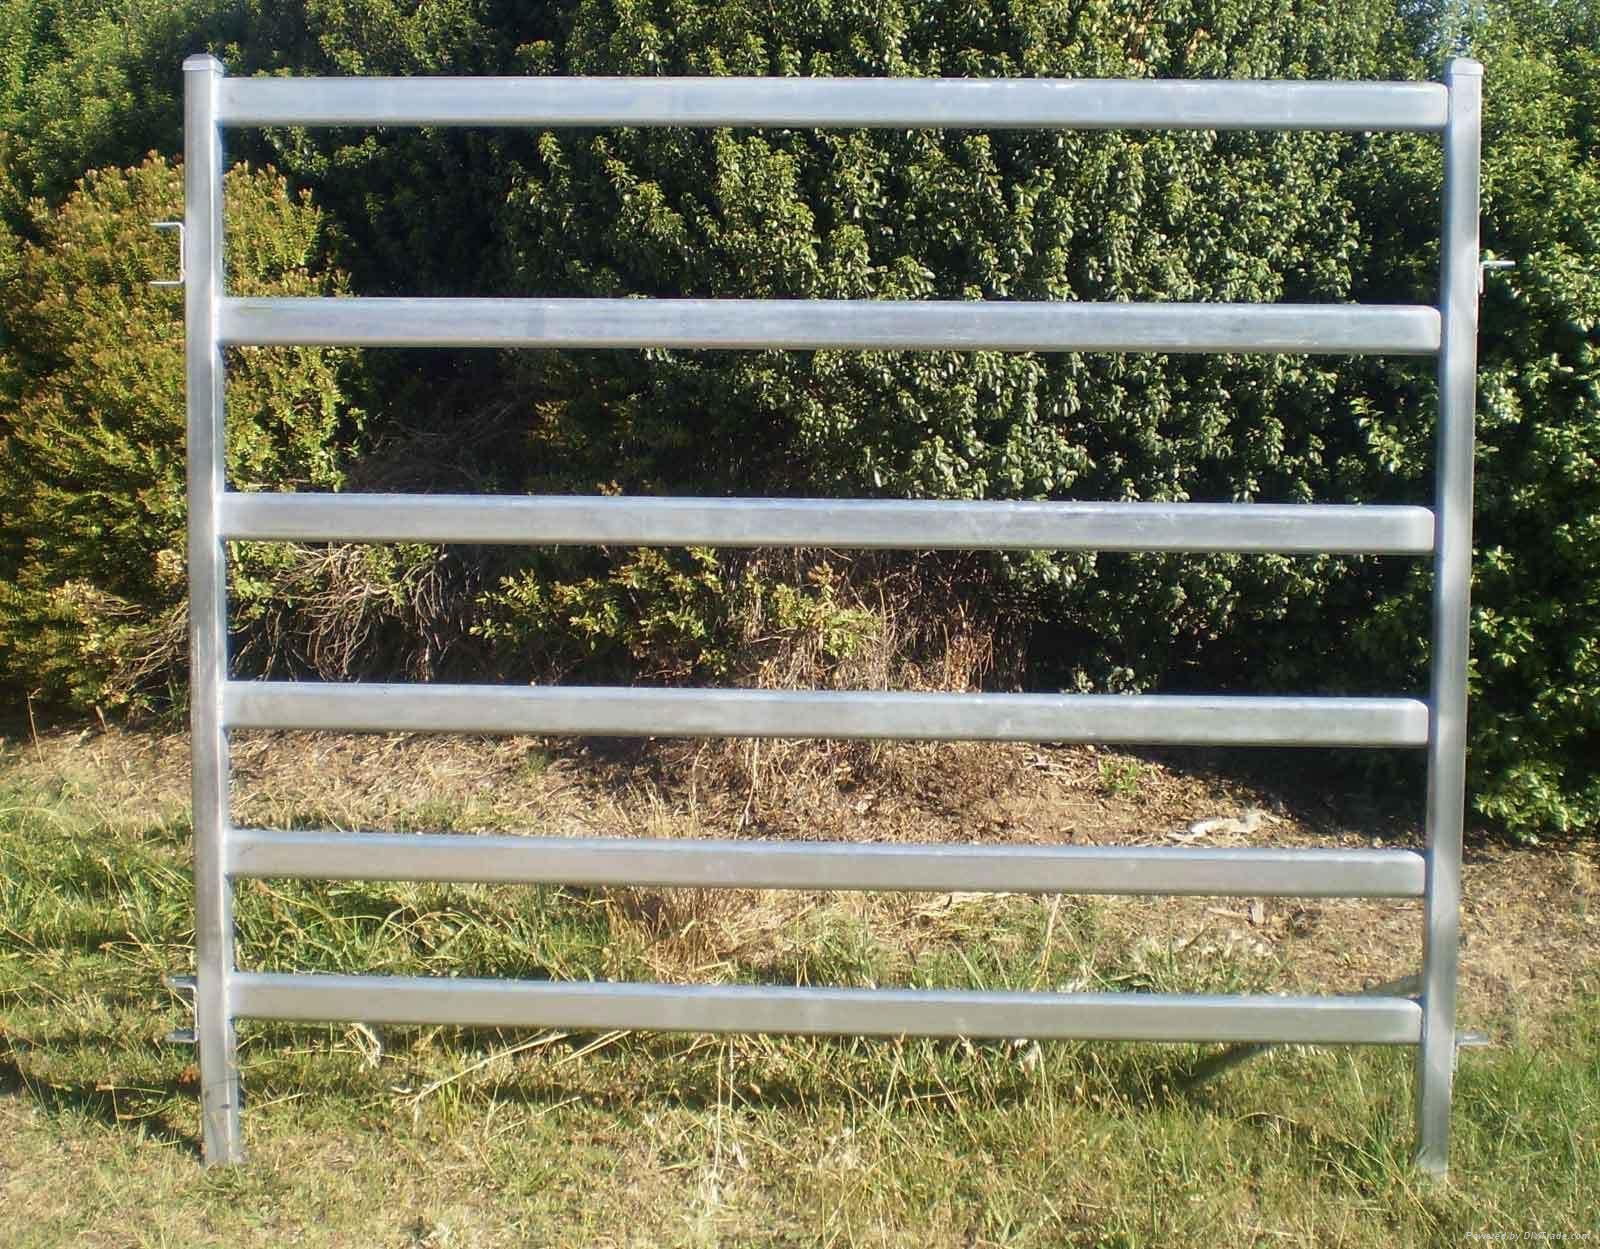 Heavy duty galvanized livestock cattle panel used cattle yard panels 5